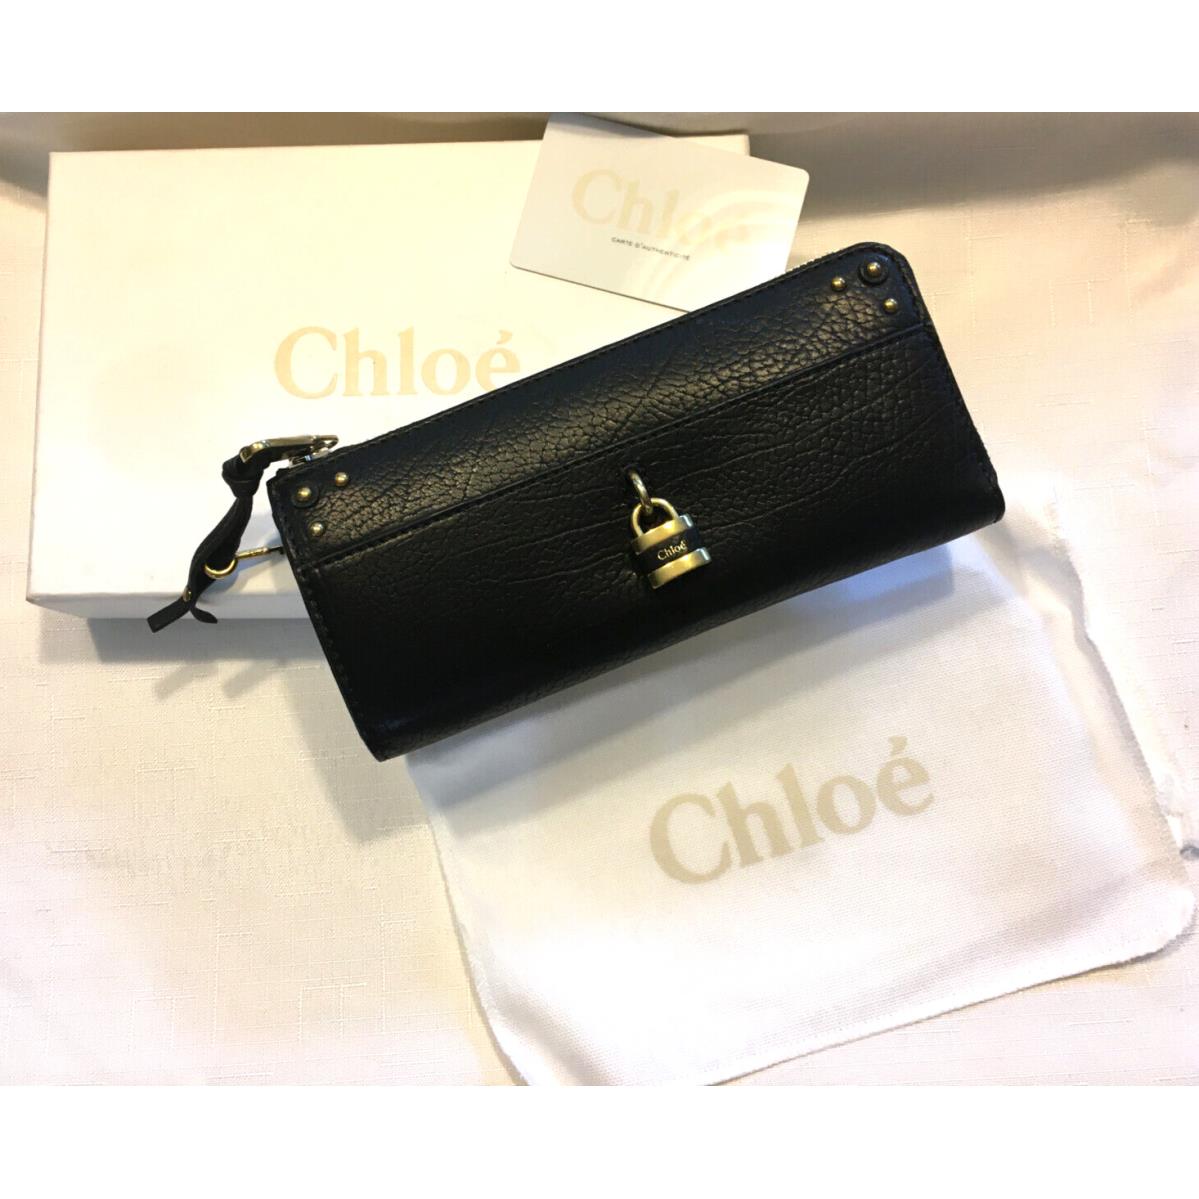 Chloe Black Leather Zip Long Wallet Purse Authenticity Card Dust Jacket Box